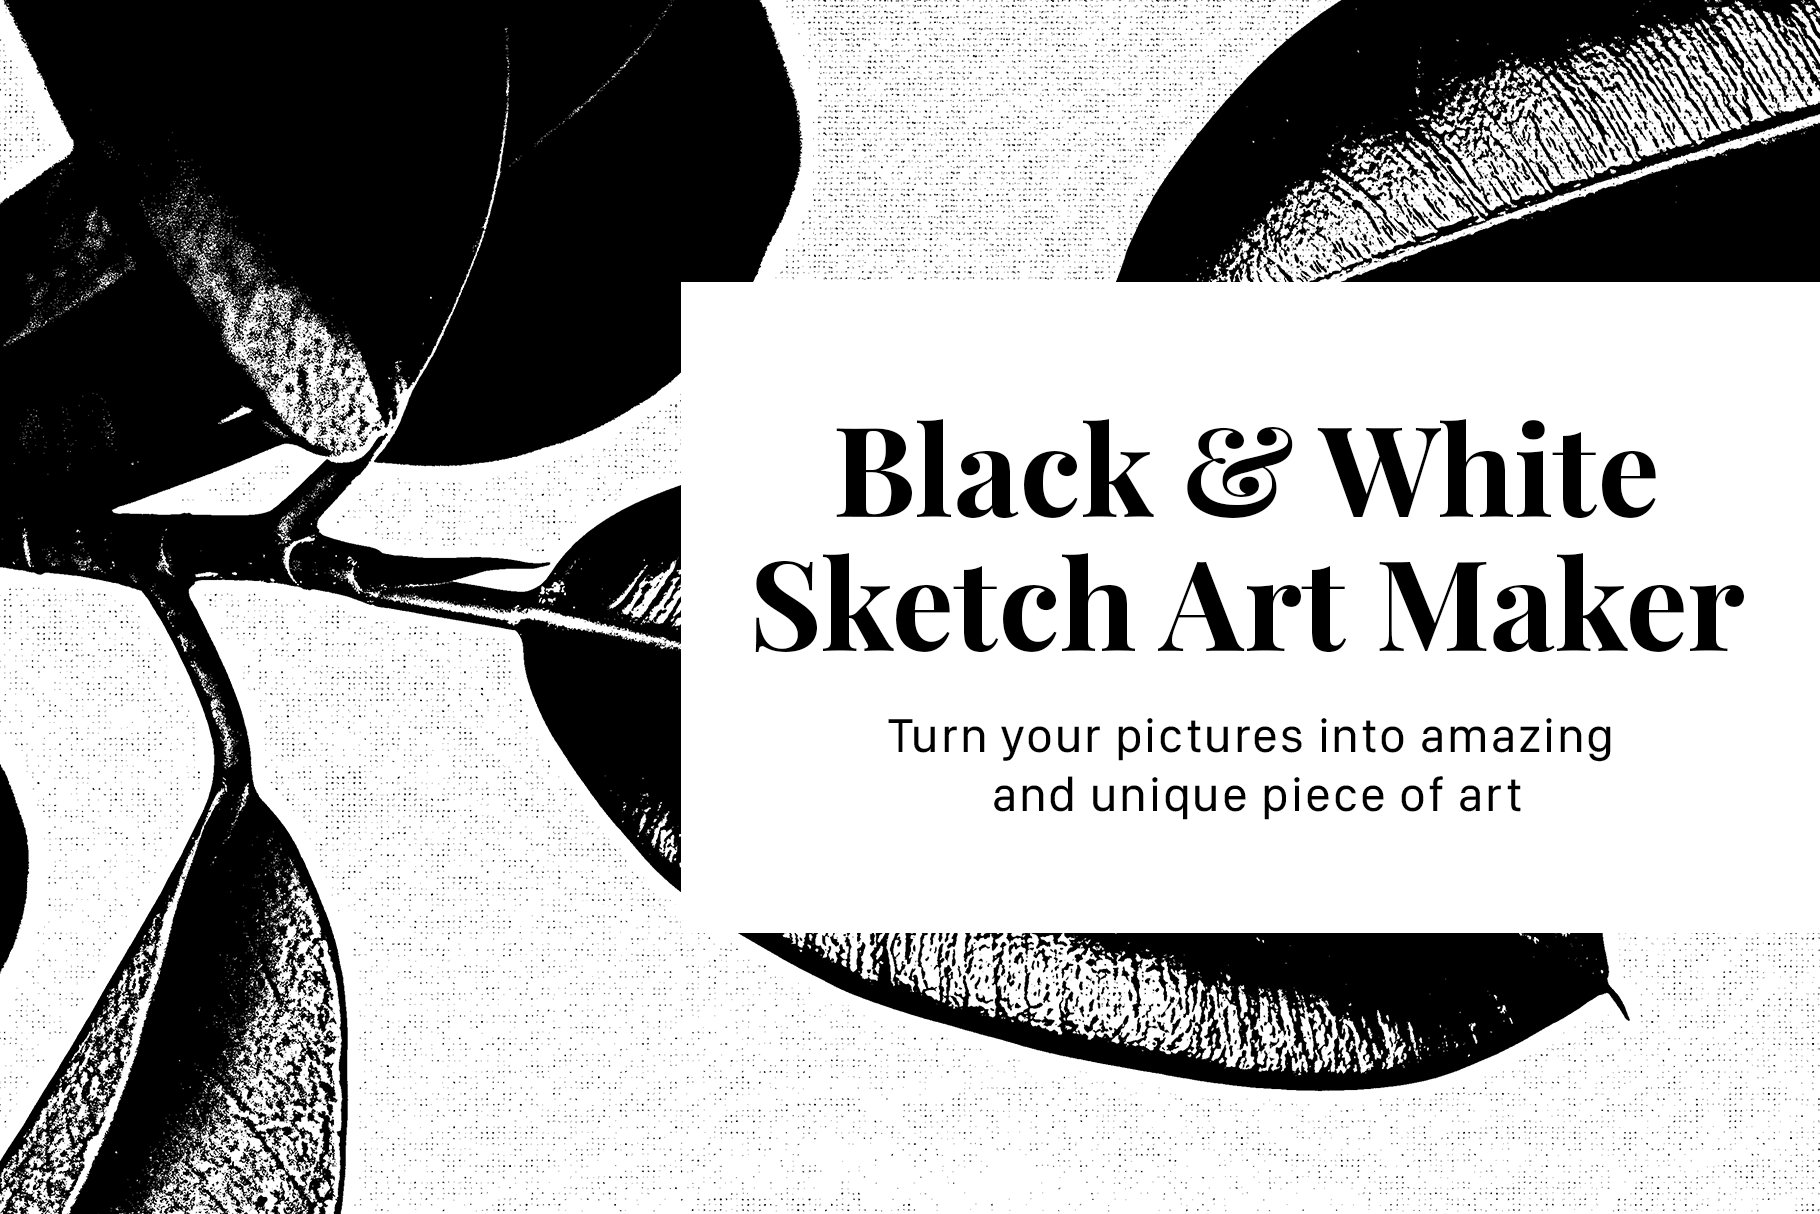 Black & White Sketch Art Makercover image.